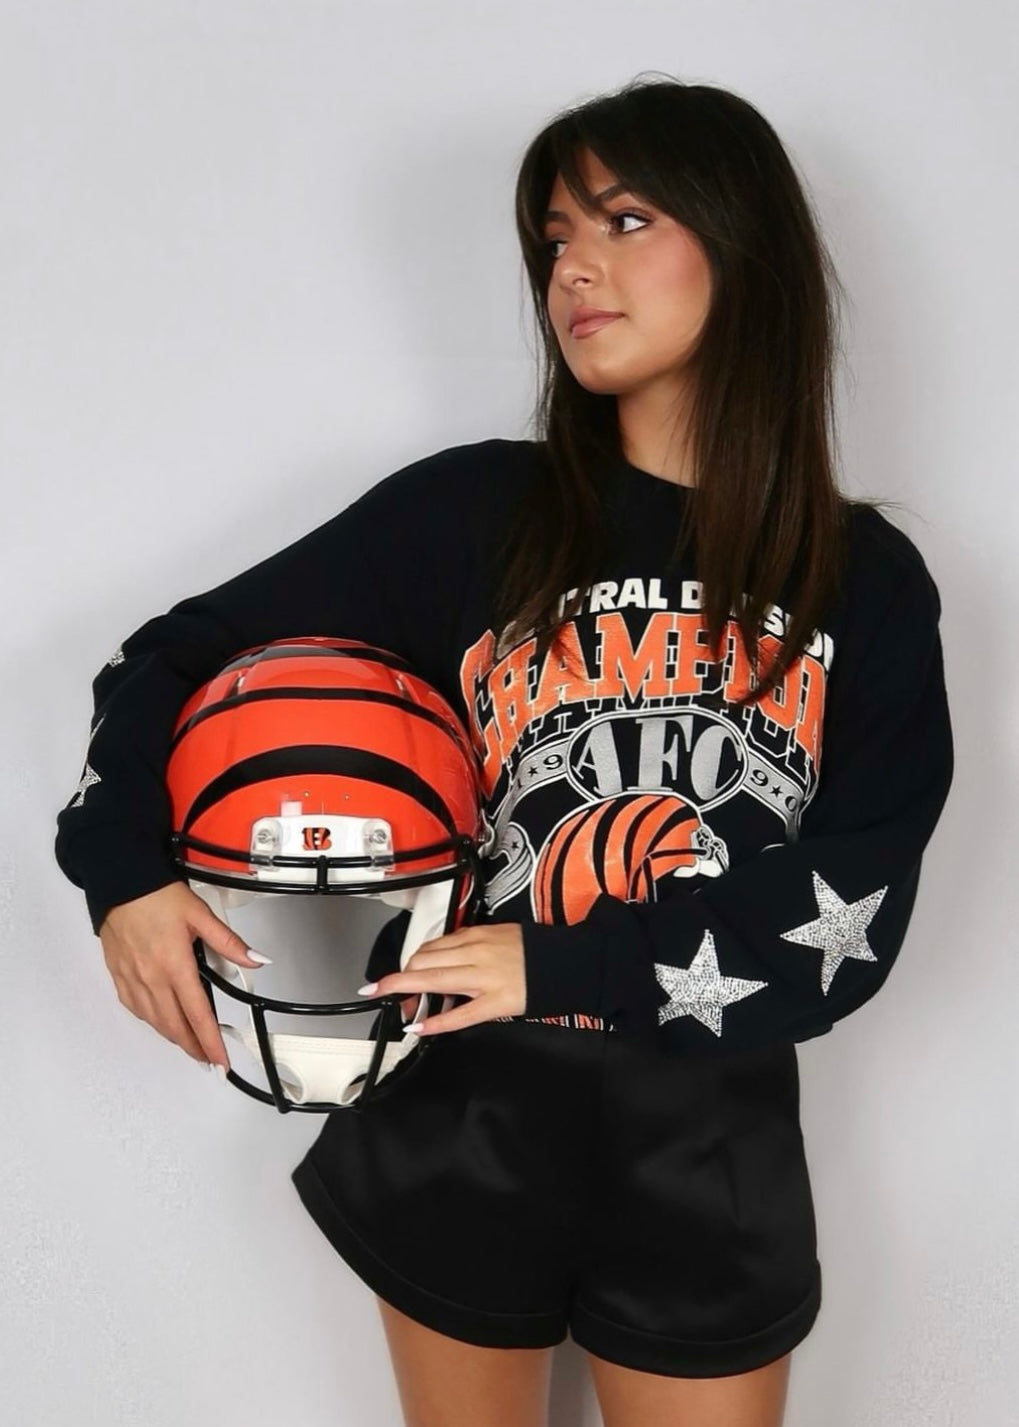 Cincinnati Bengals, NFL One of a KIND Vintage ”Rare Find” Sweatshirt with Crystal Star Design